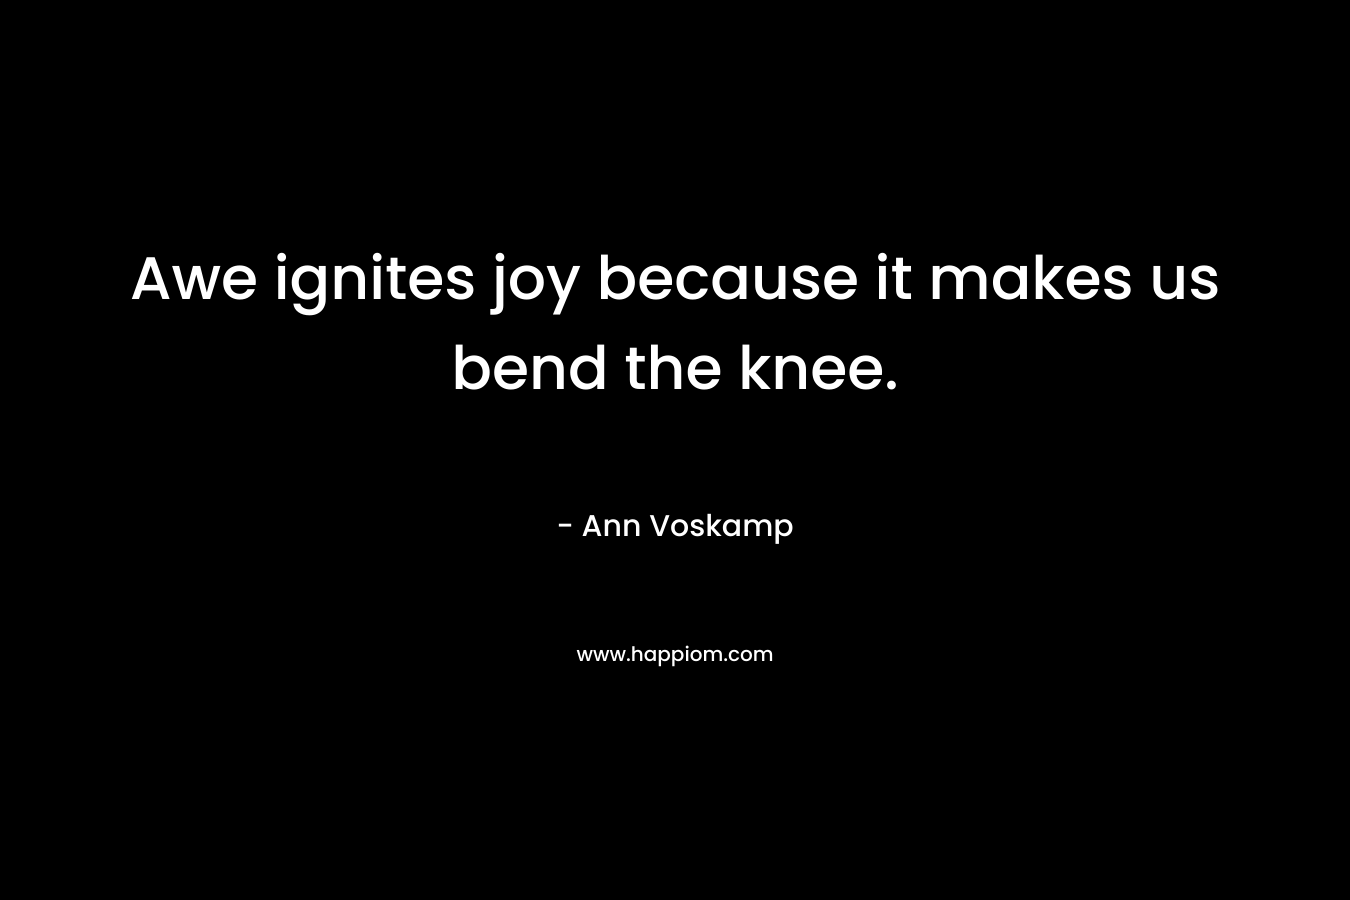 Awe ignites joy because it makes us bend the knee. – Ann Voskamp